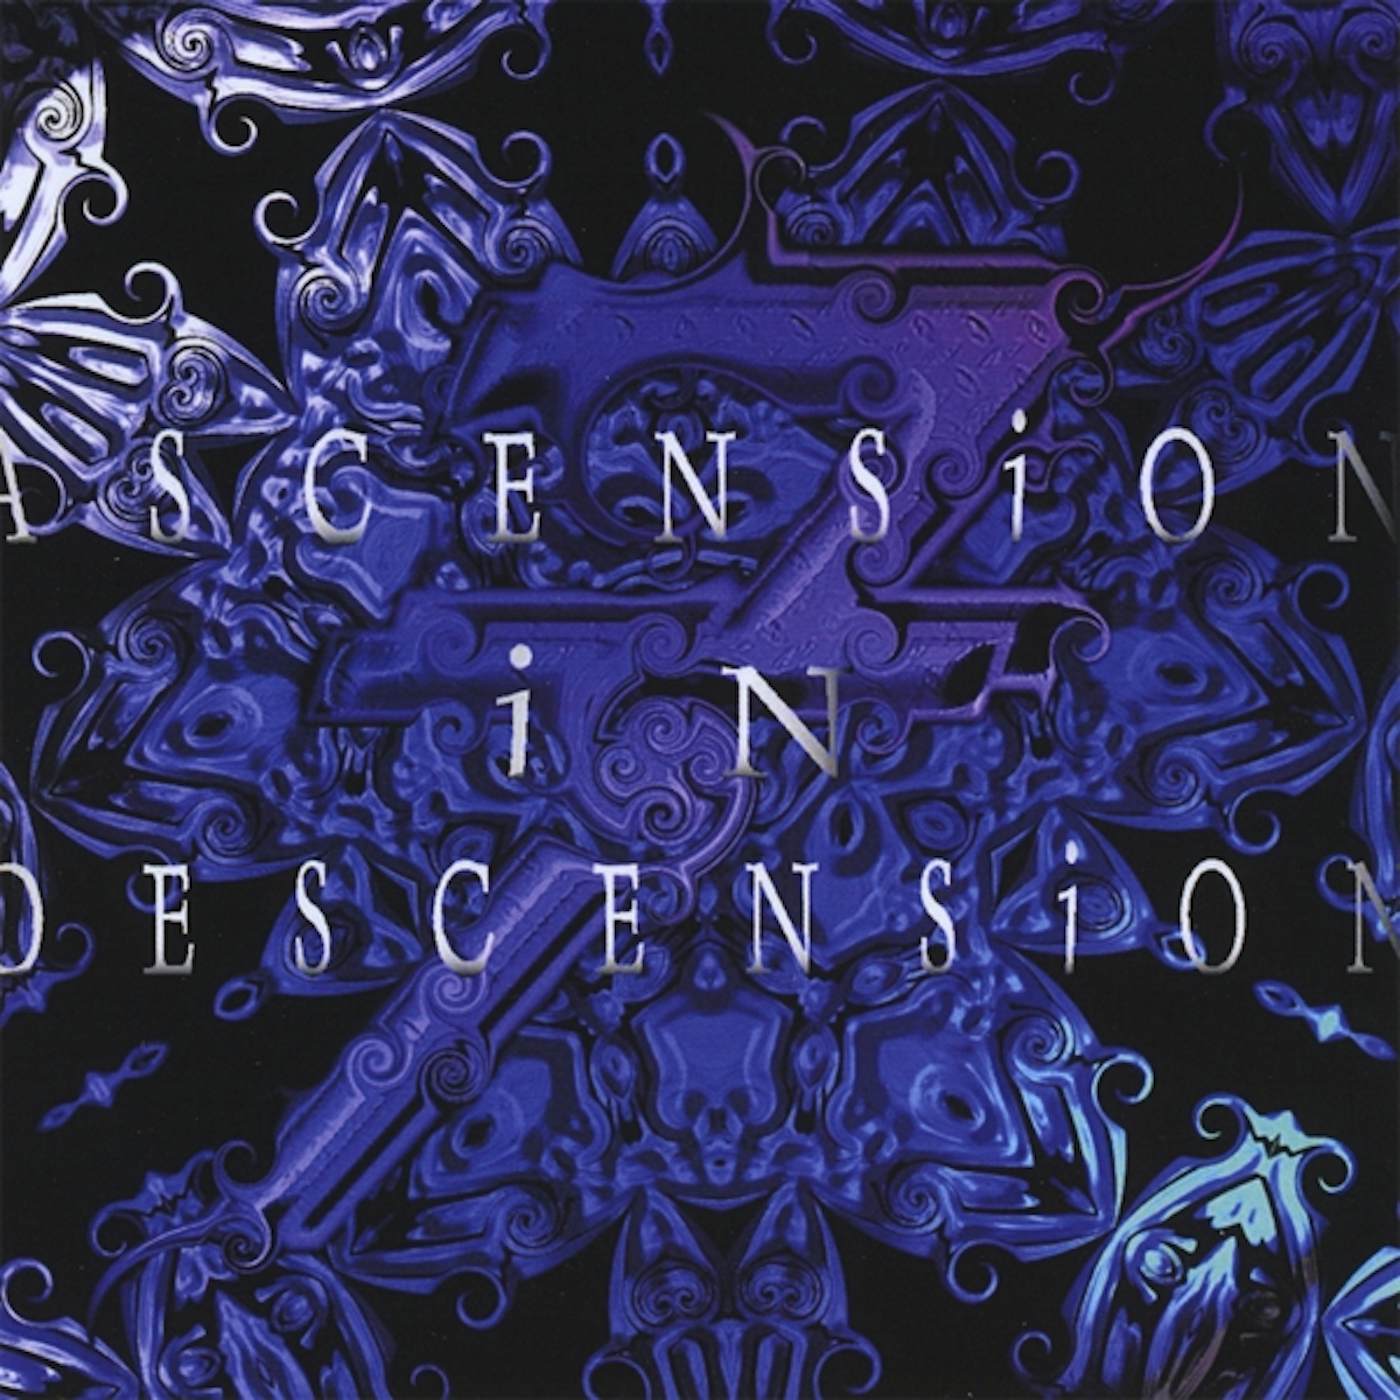 7 ASCENSION IN DESCENSION CD